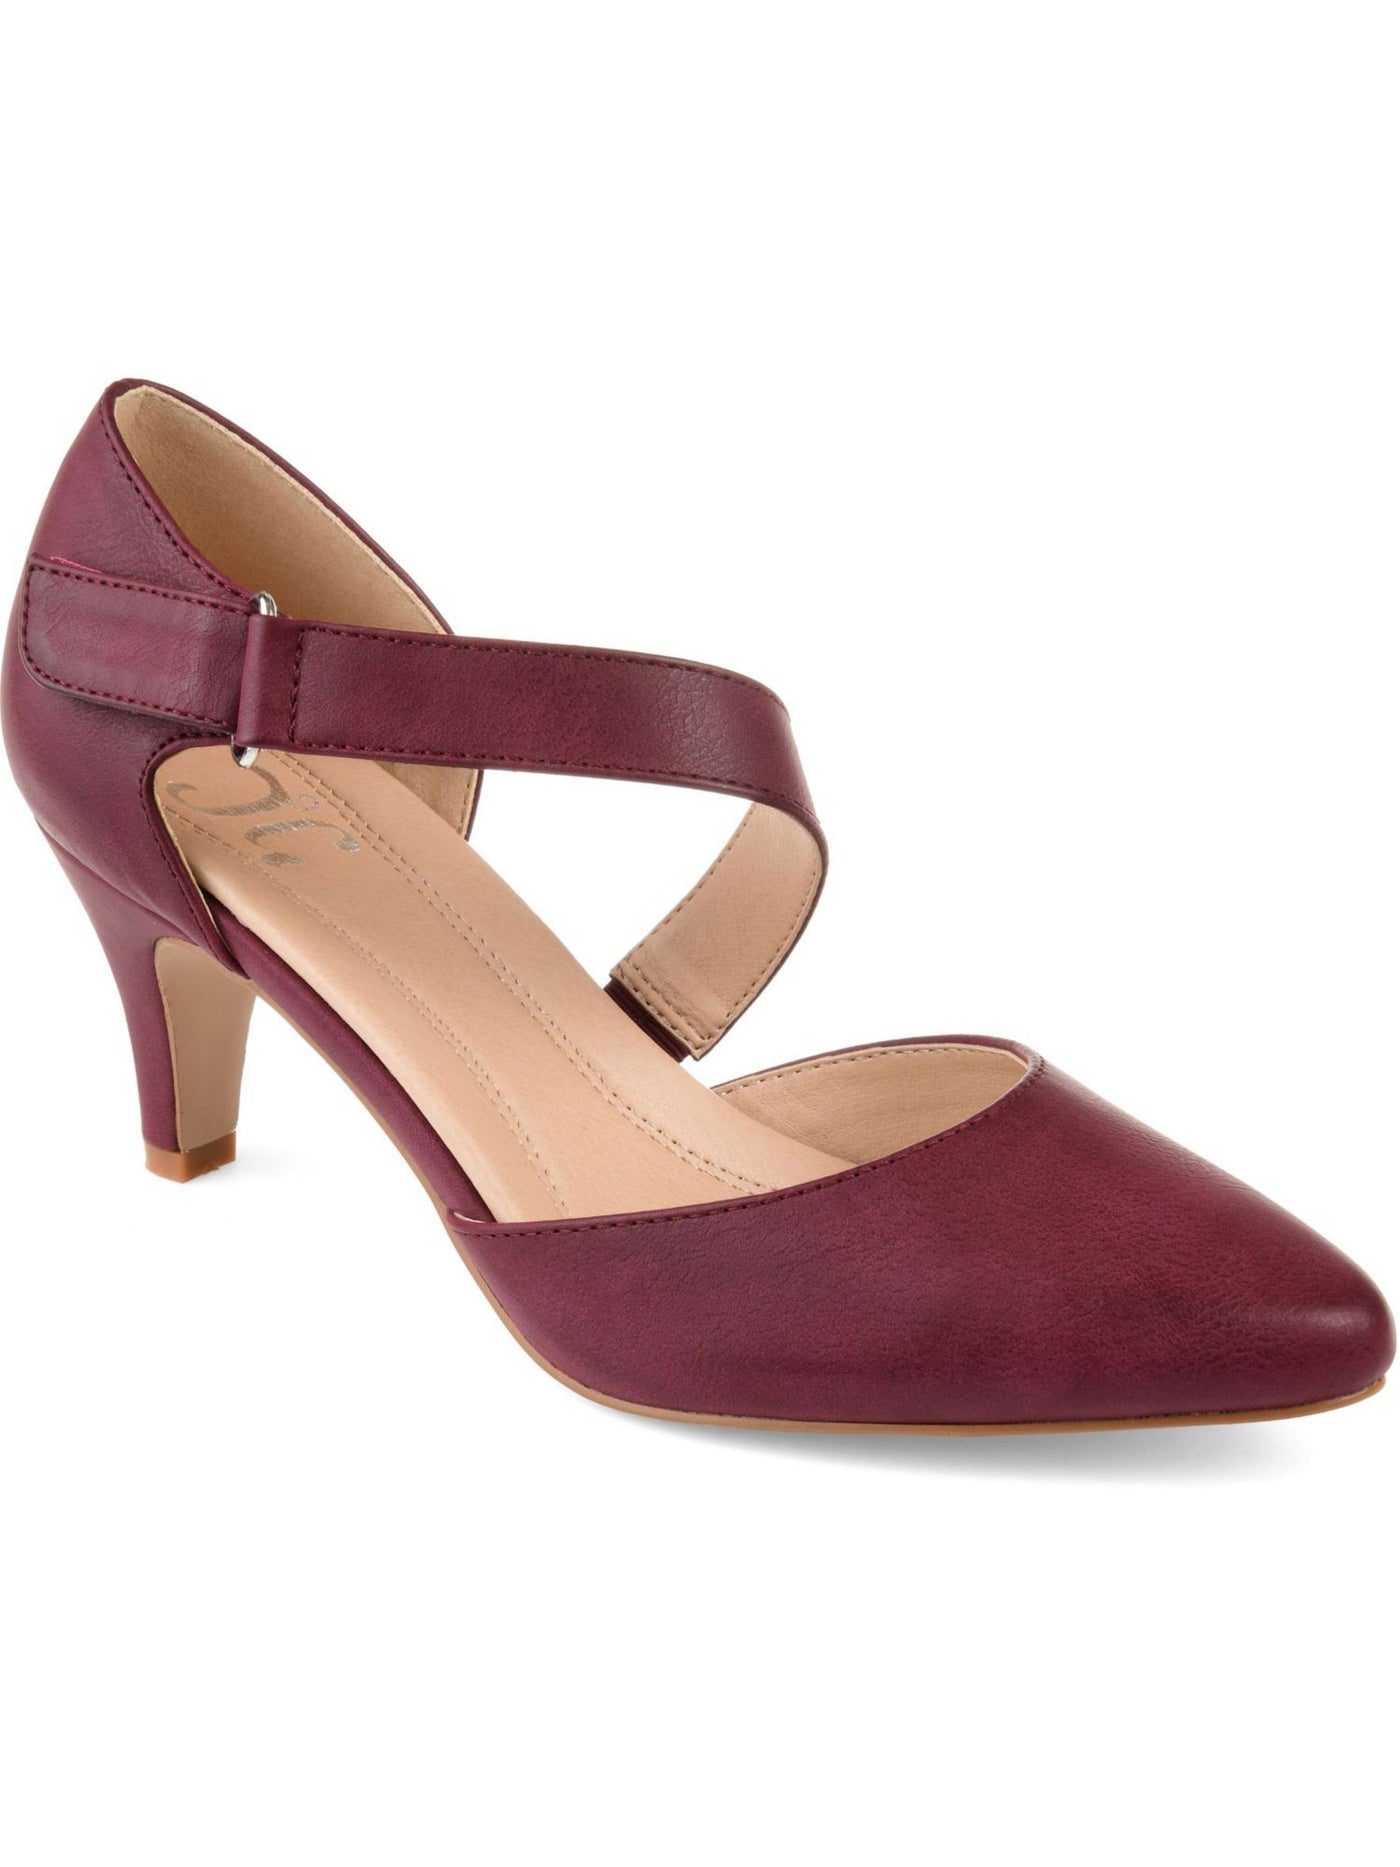 JOURNEE COLLECTION Womens Red Asymmetrical Adjustable Padded Tillis Almond Toe Kitten Heel Dress Pumps Shoes 9.5